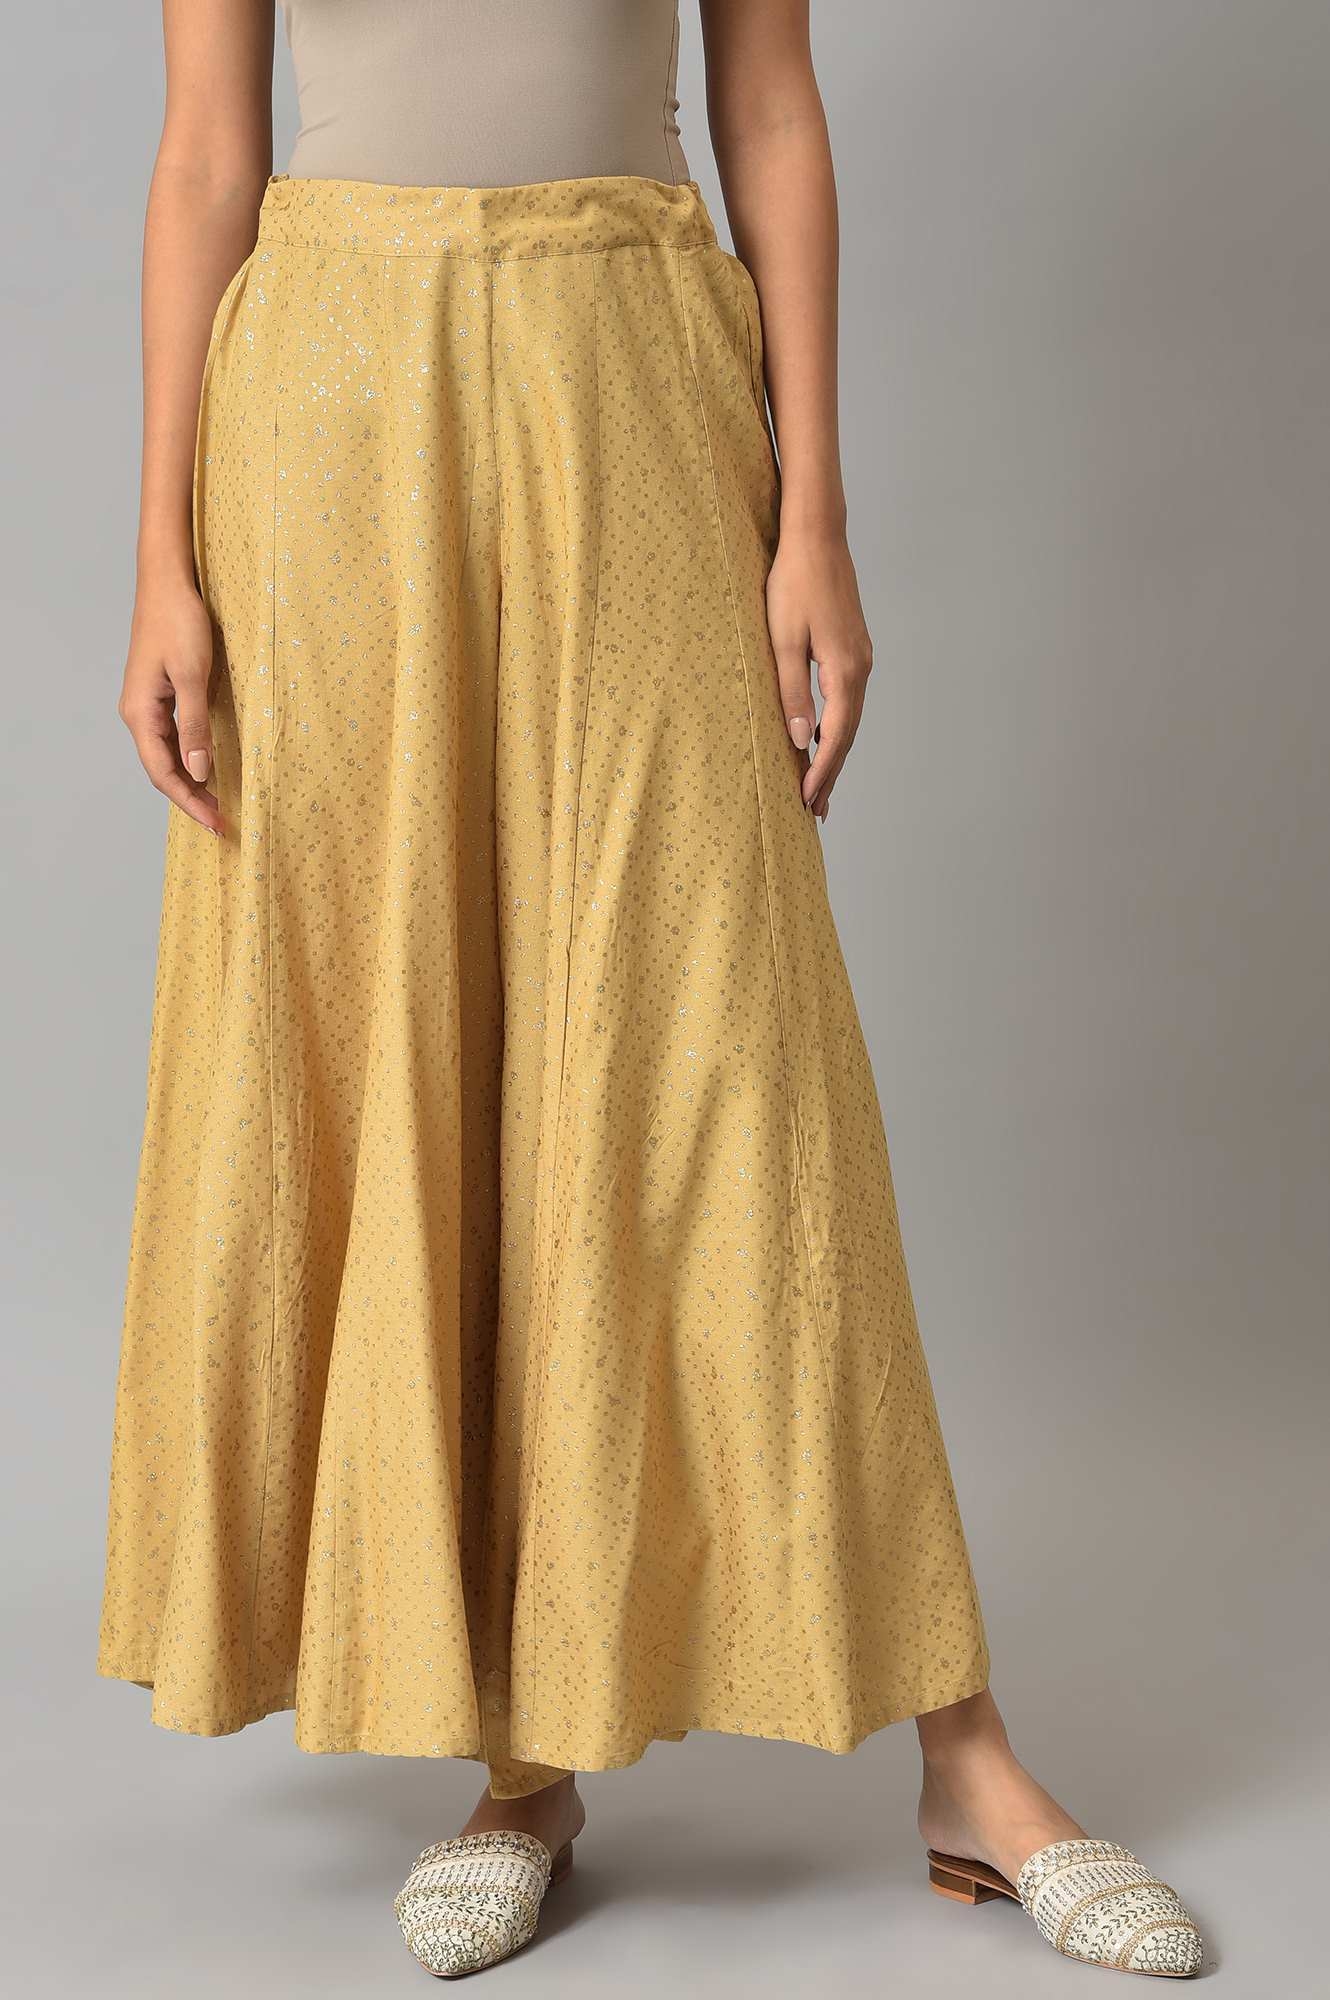 W | W Golden Glitter Rayon Culottes in Polka Dots